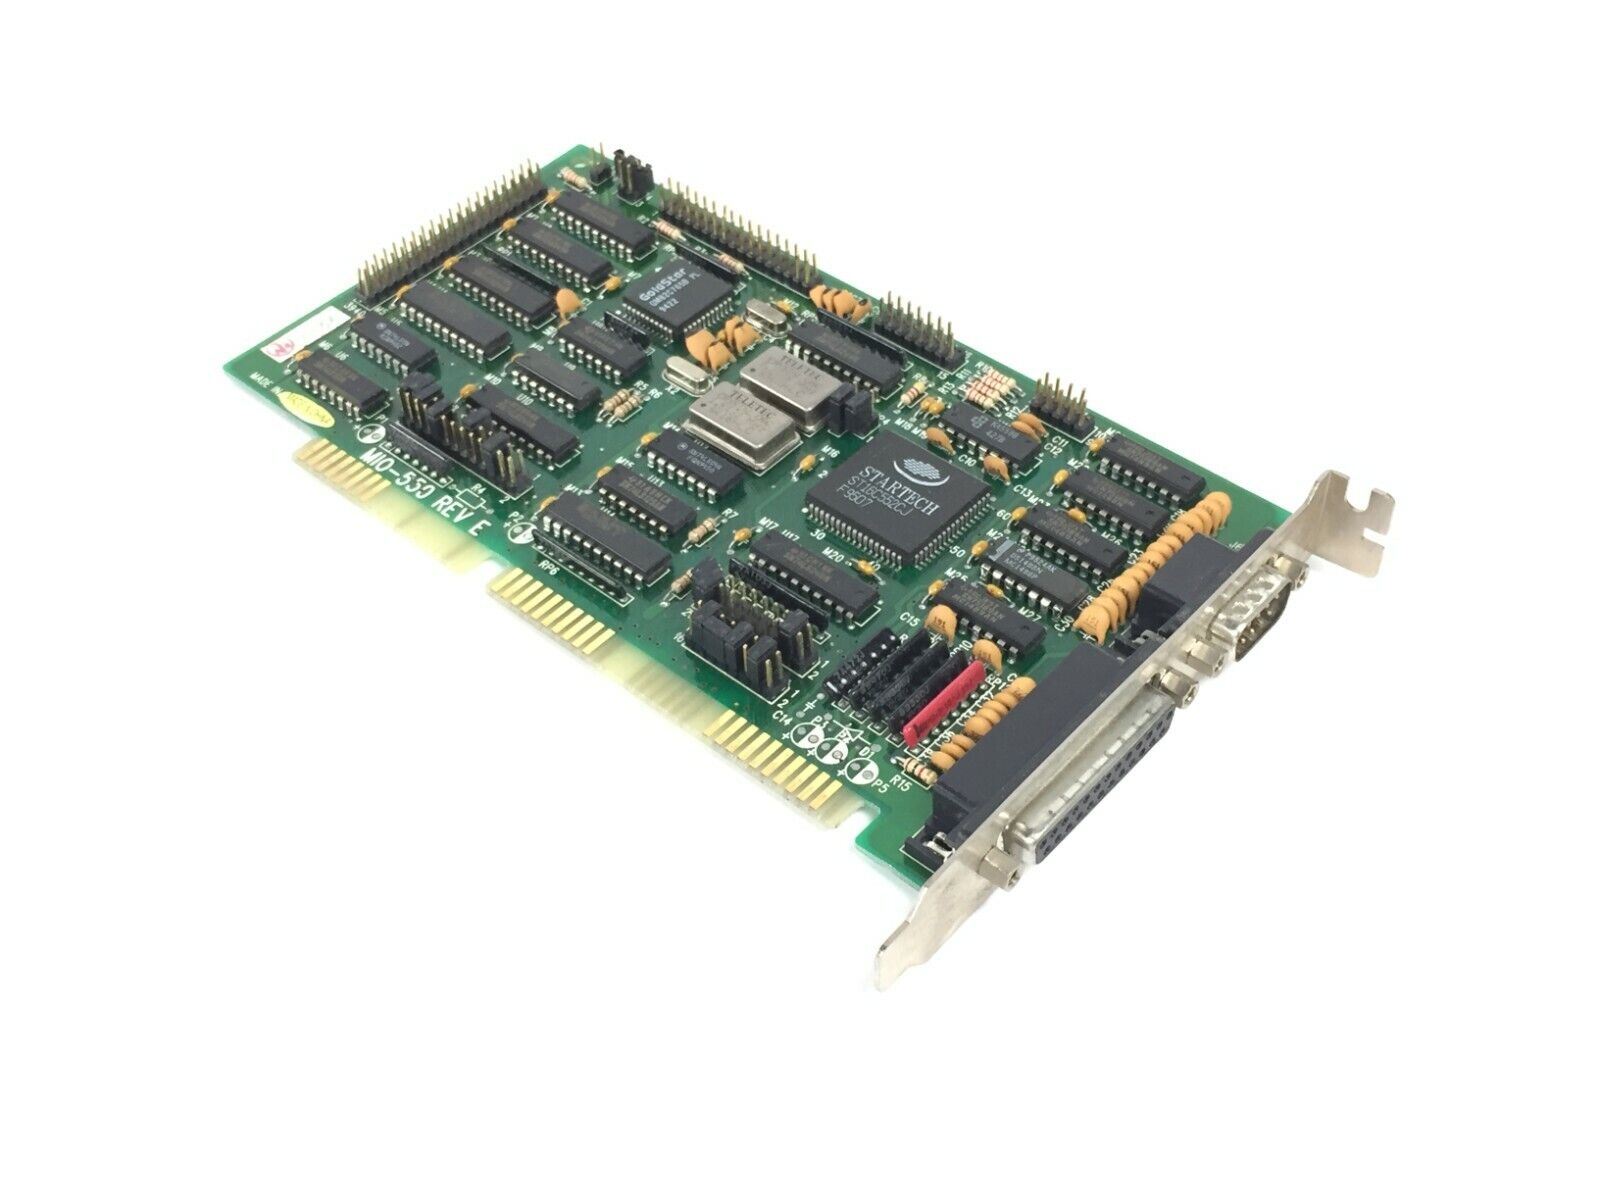 StarTech MIO-550 Rev E 16-Bit ISA Card ST16C552CJ